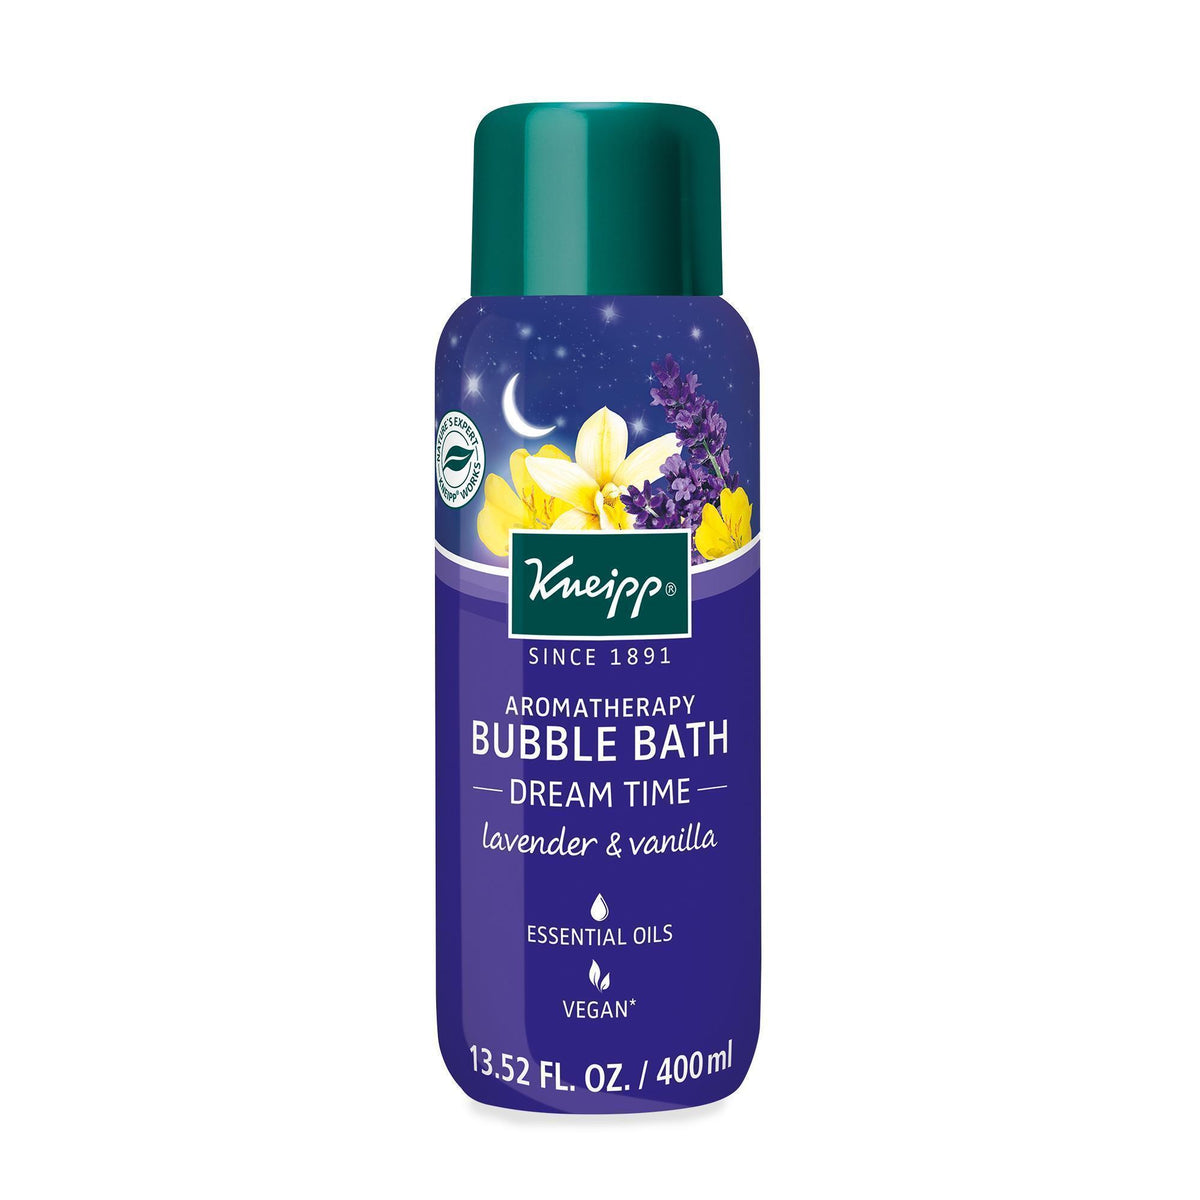 Kneipp Dream Time Bubble Bath 13.52 Fl. Oz.